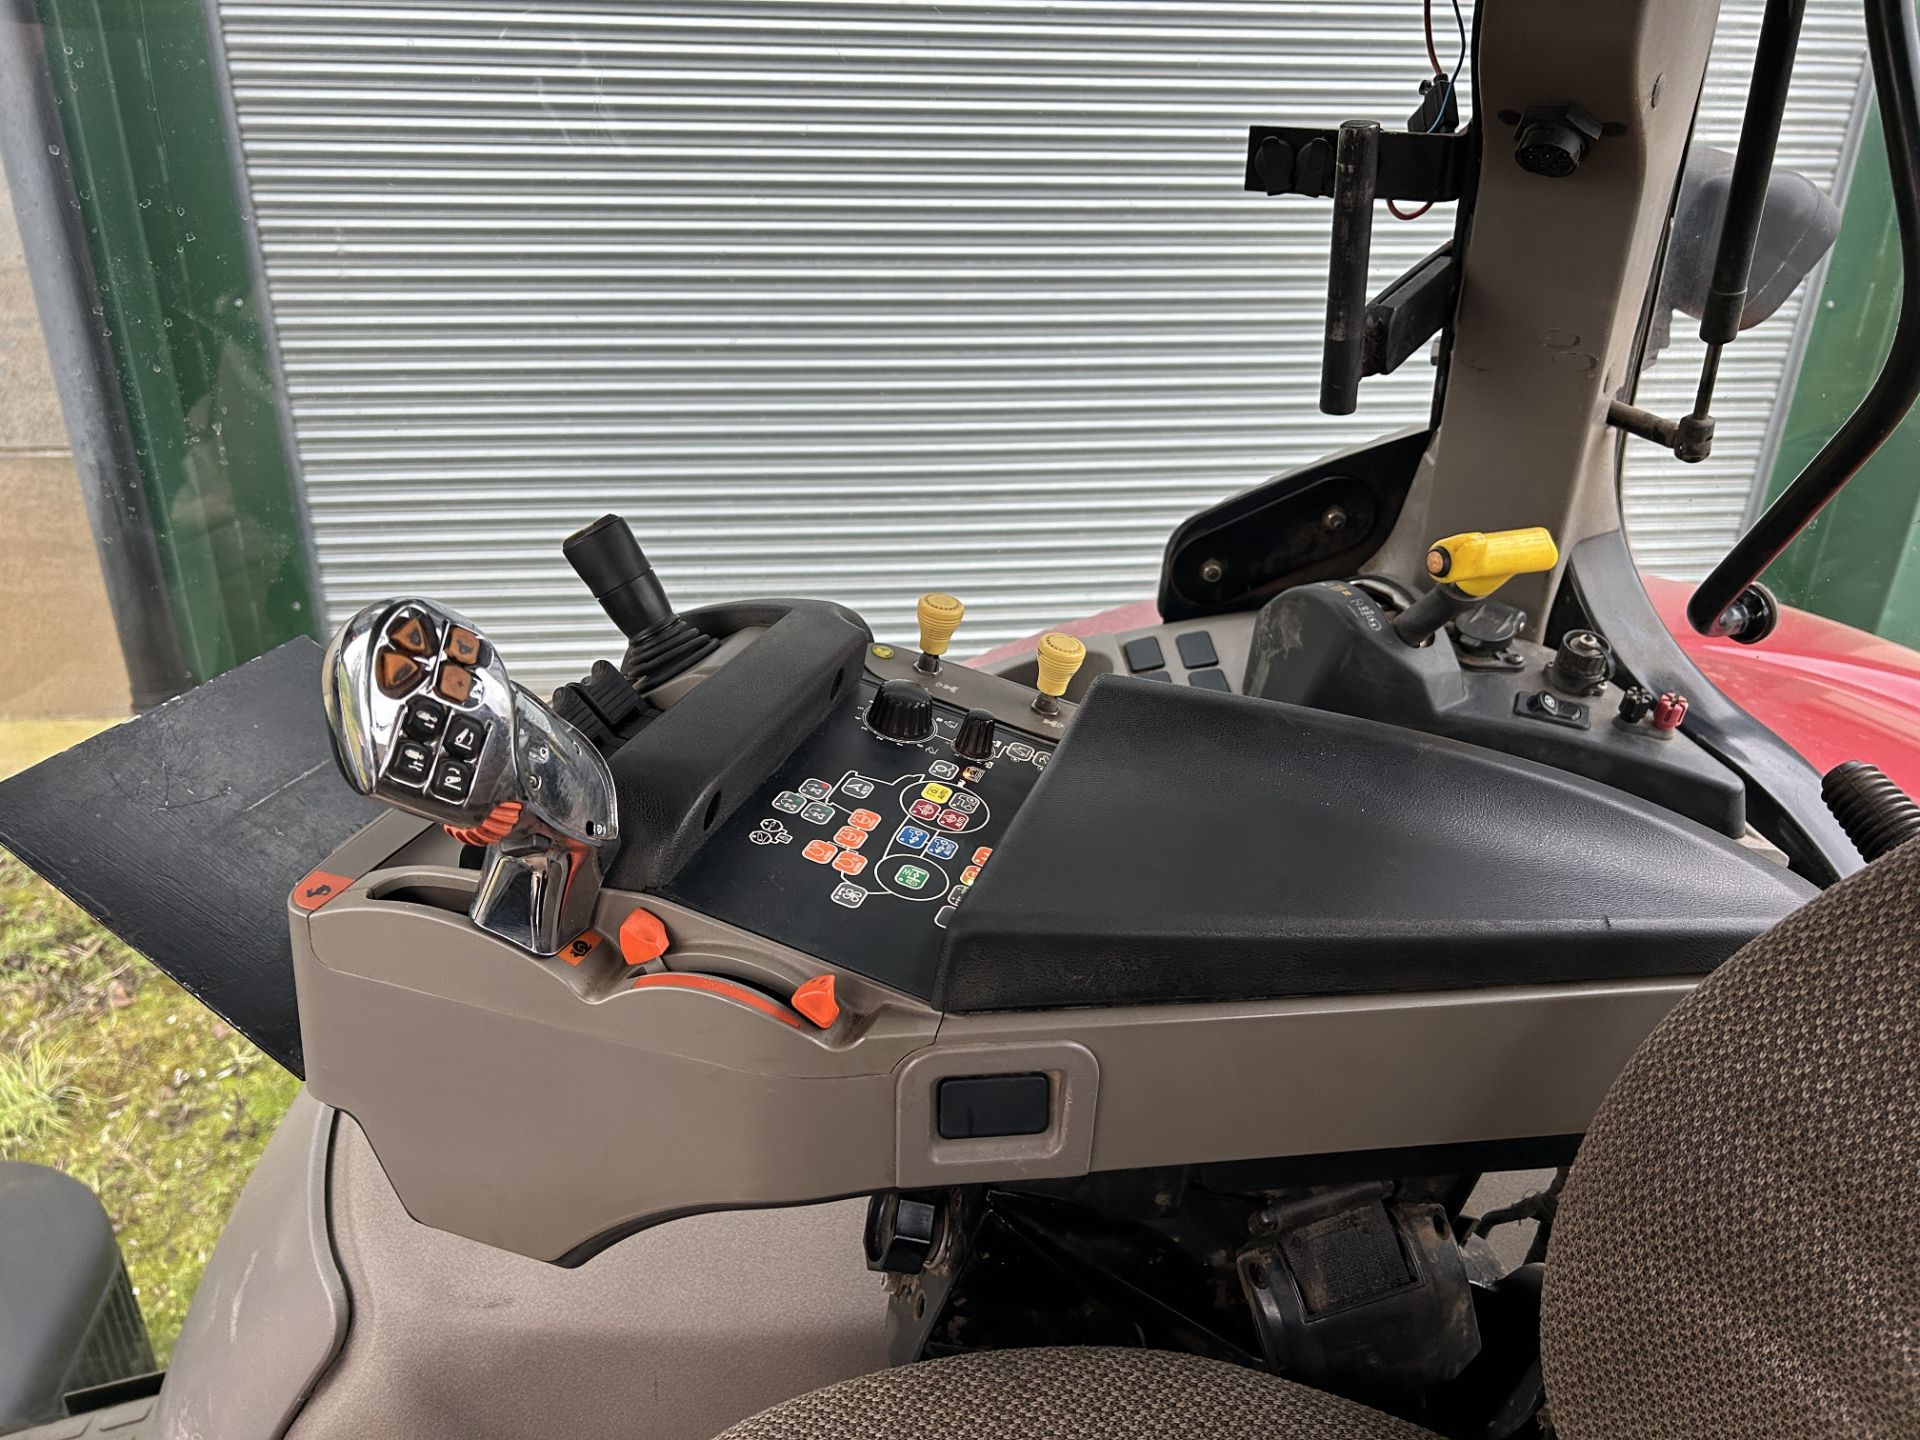 CASE PUMA 160CVX TRACTOR (2012), 4WD, 8189 HRS, REG NO: YJ12 FFK, SERIAL NUMBER: ZCBP55020 (MANUAL, - Image 5 of 7